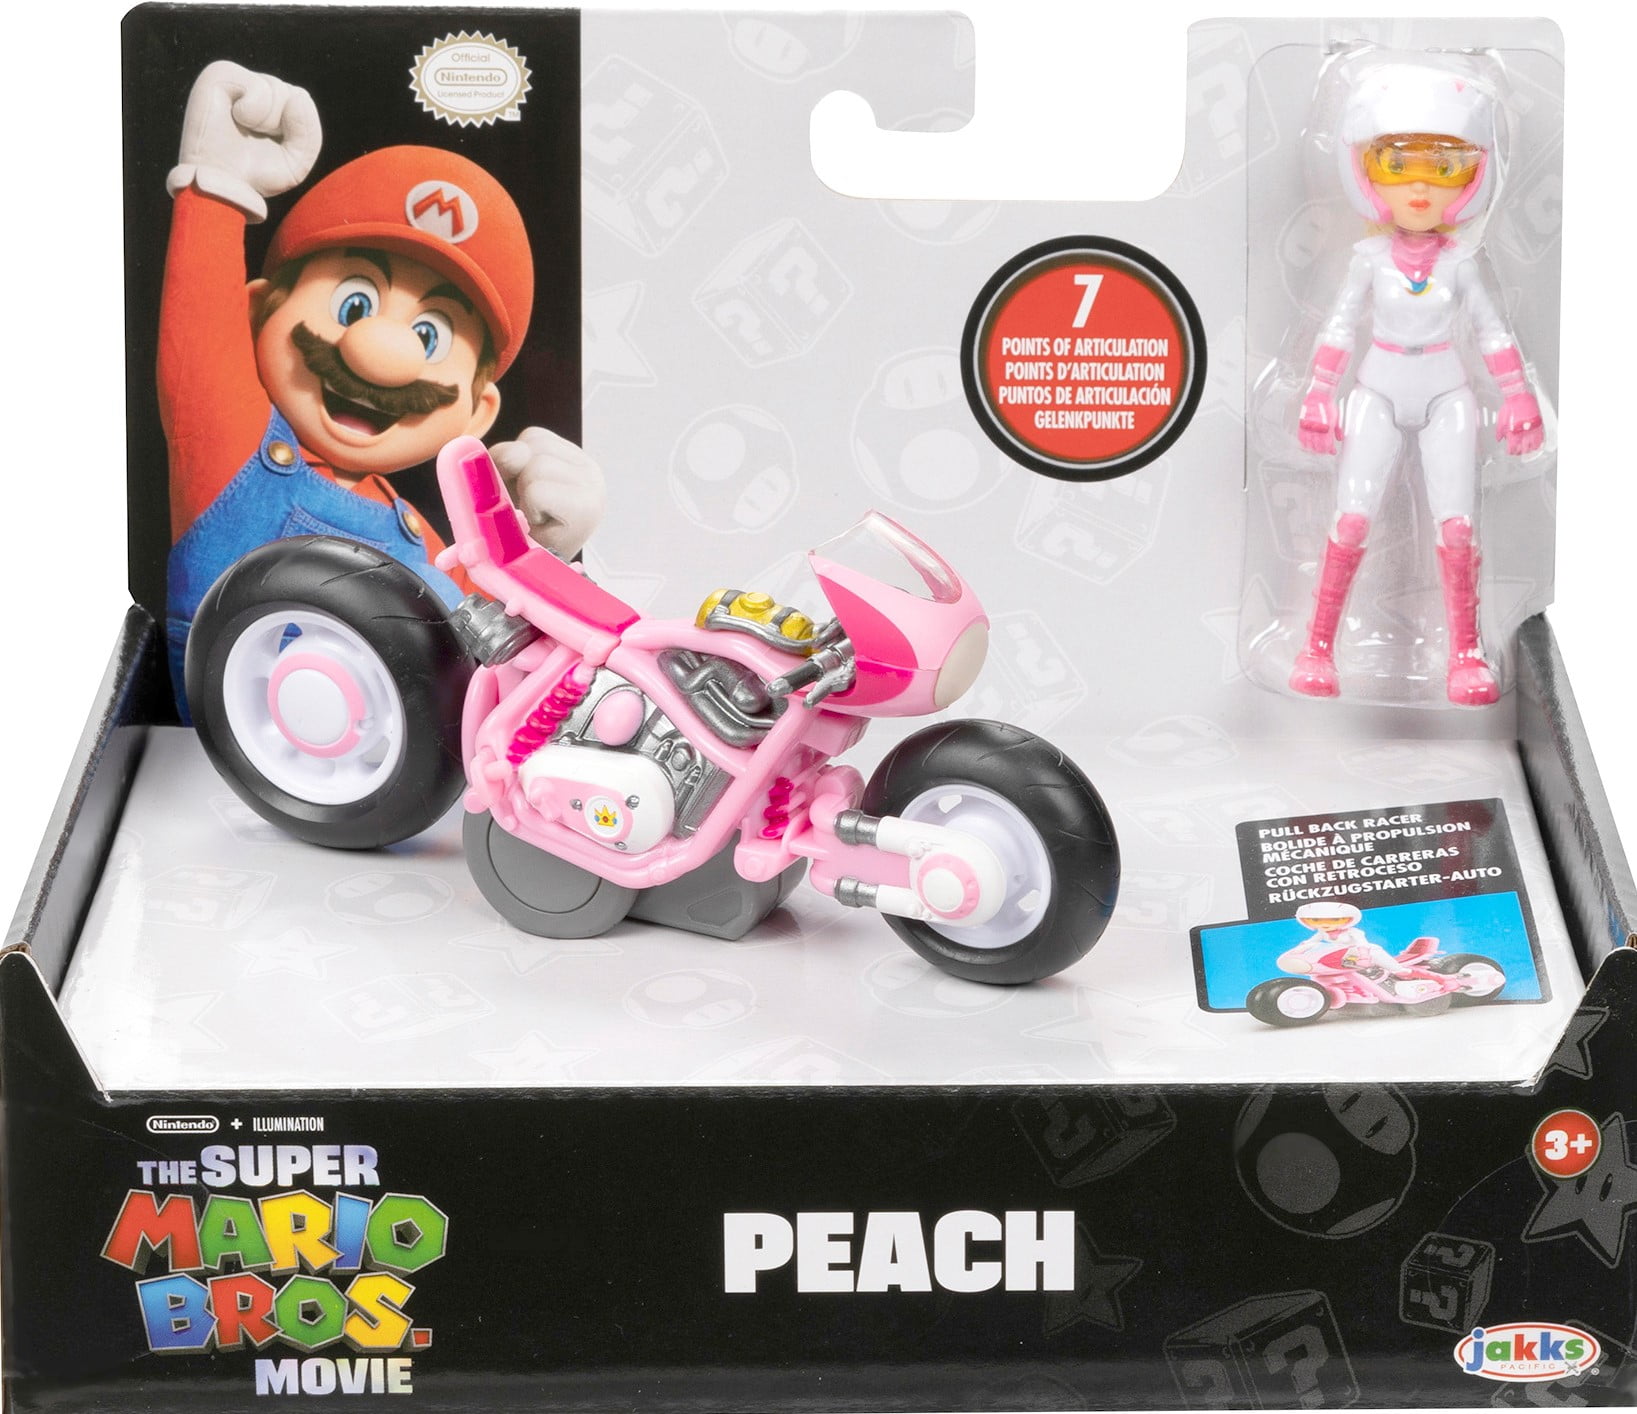 Super Mario Bros Movie 2 5 Inch Princess Peach Action Figure With Pull